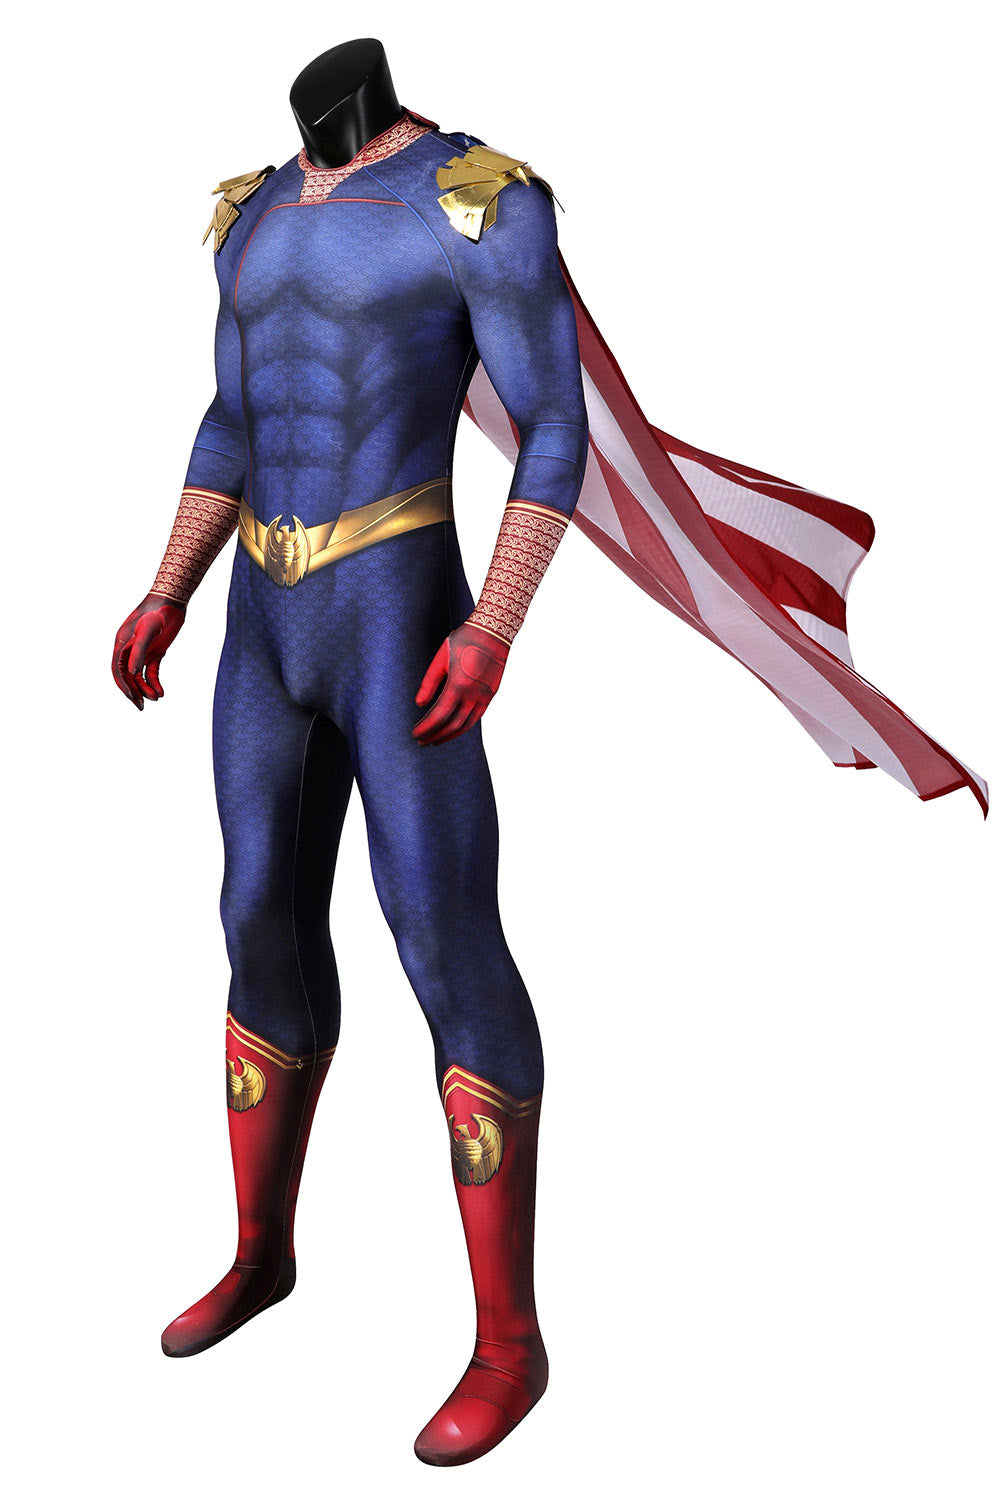 The Boys Superhelden Homelander Cosplay Kostüm Jumpsuit